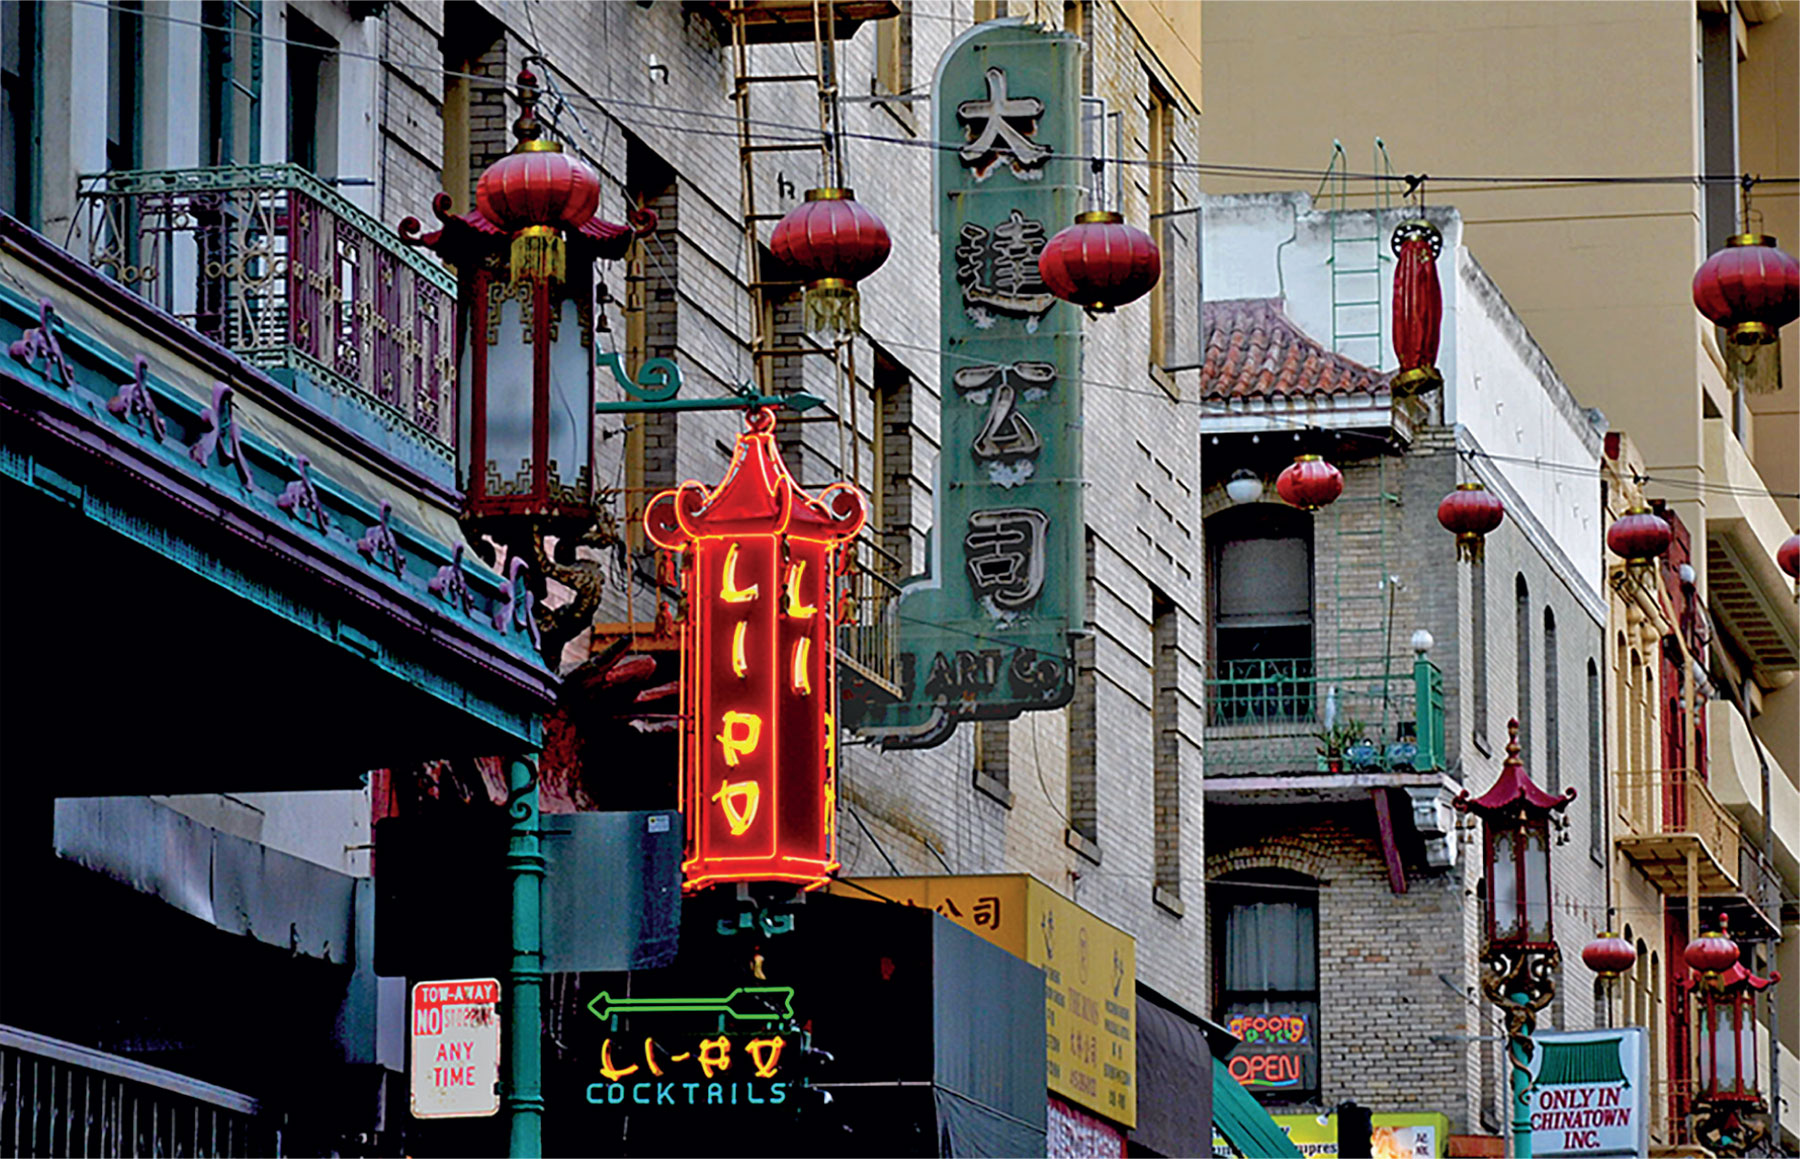 Li Po Cocktail Lounge neon sign - 916 Grant Street, San Francisco